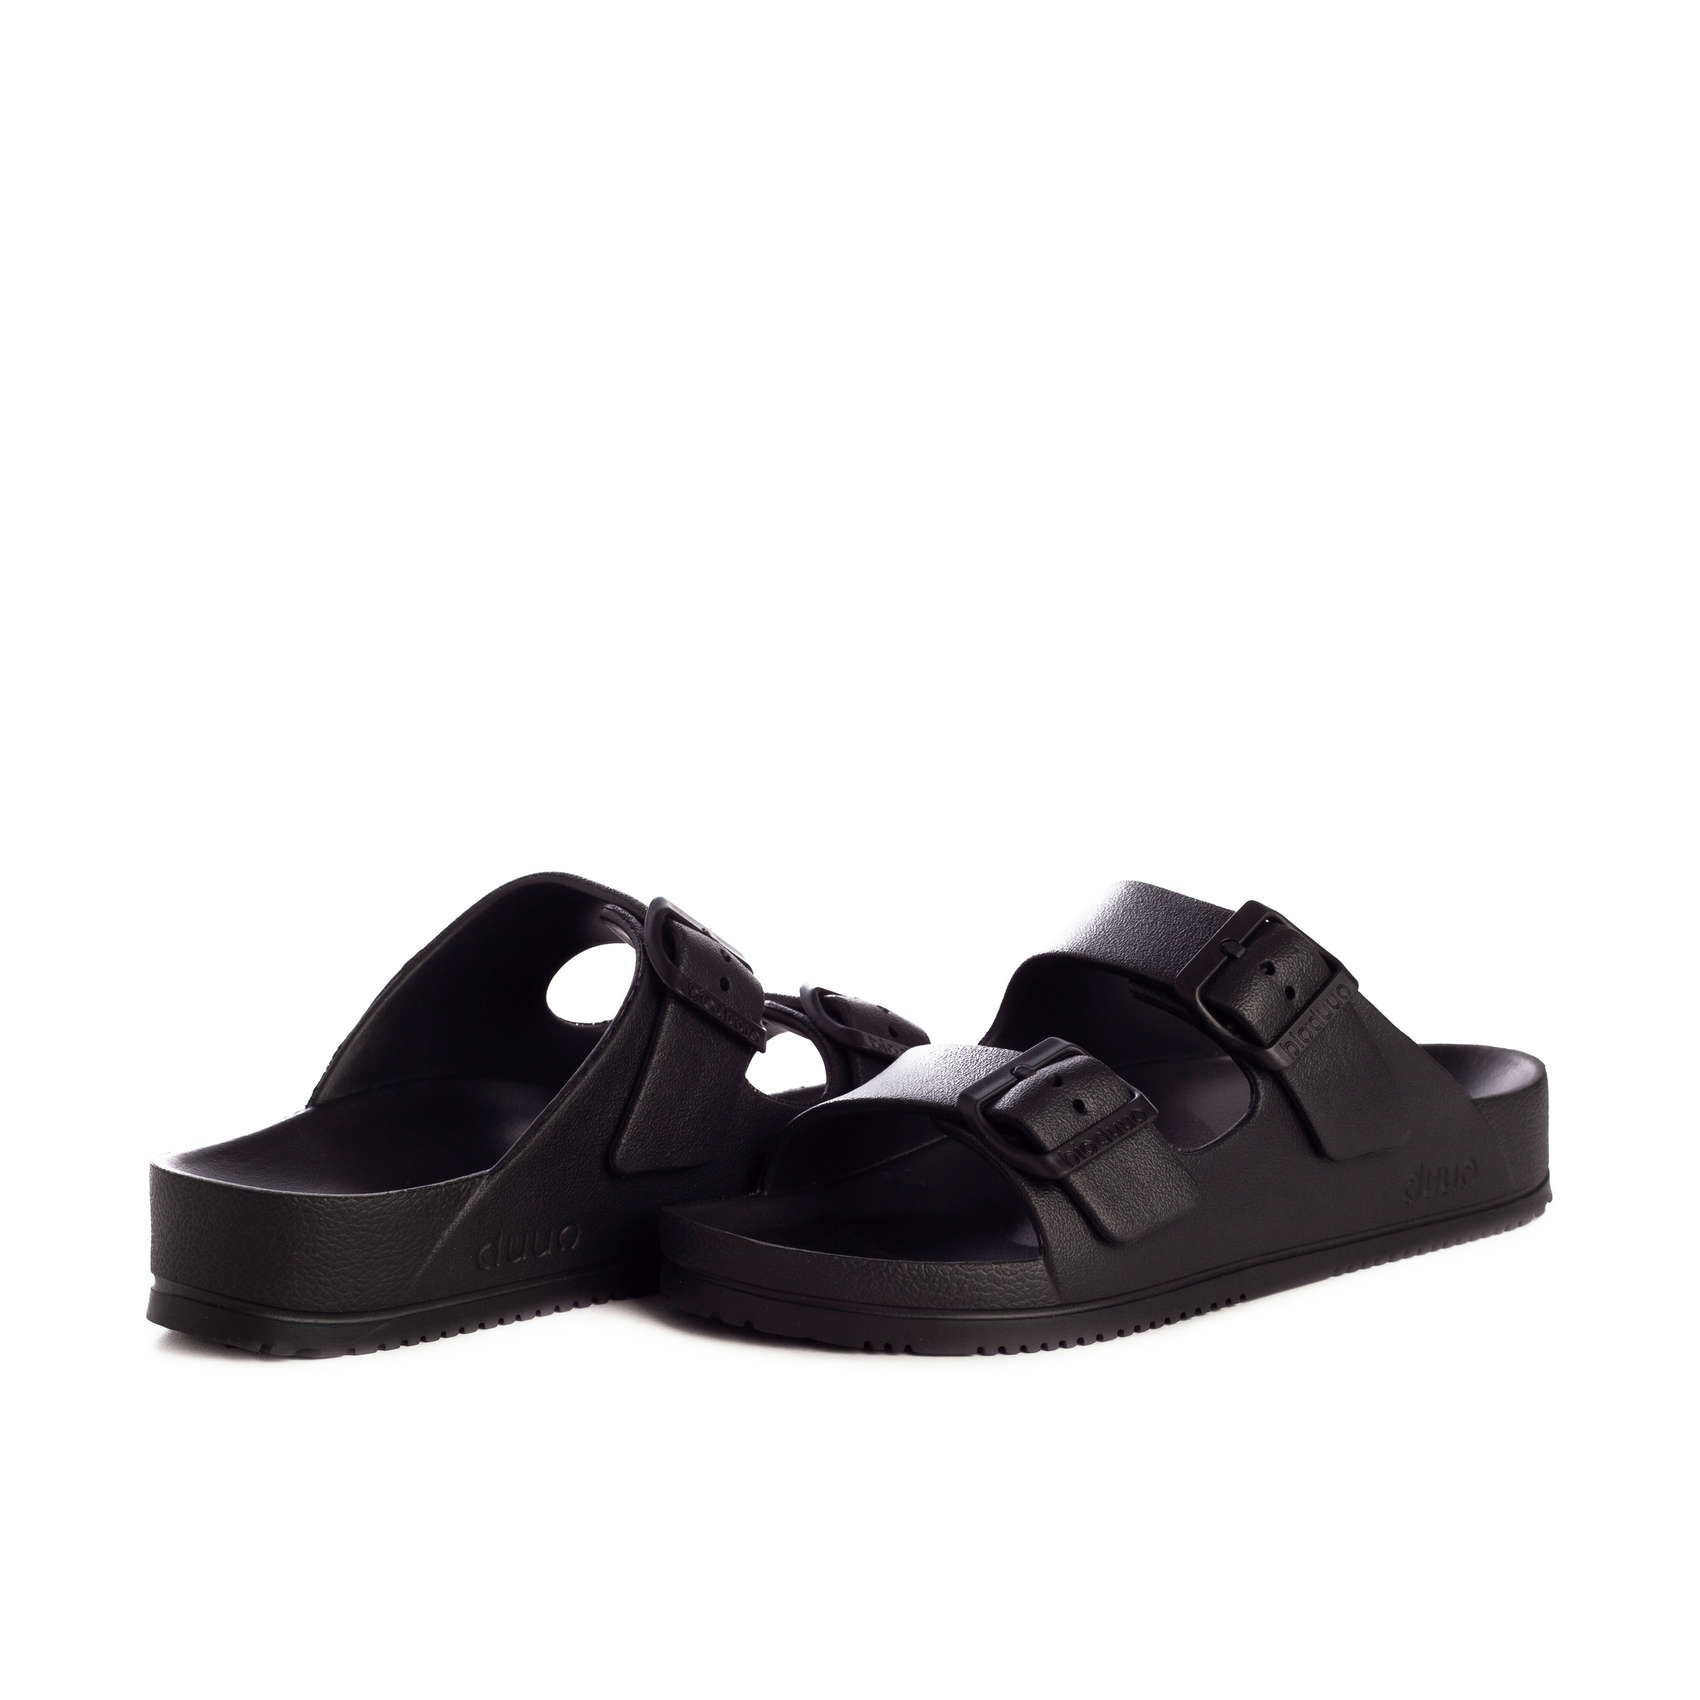 Flat sandal block color in black